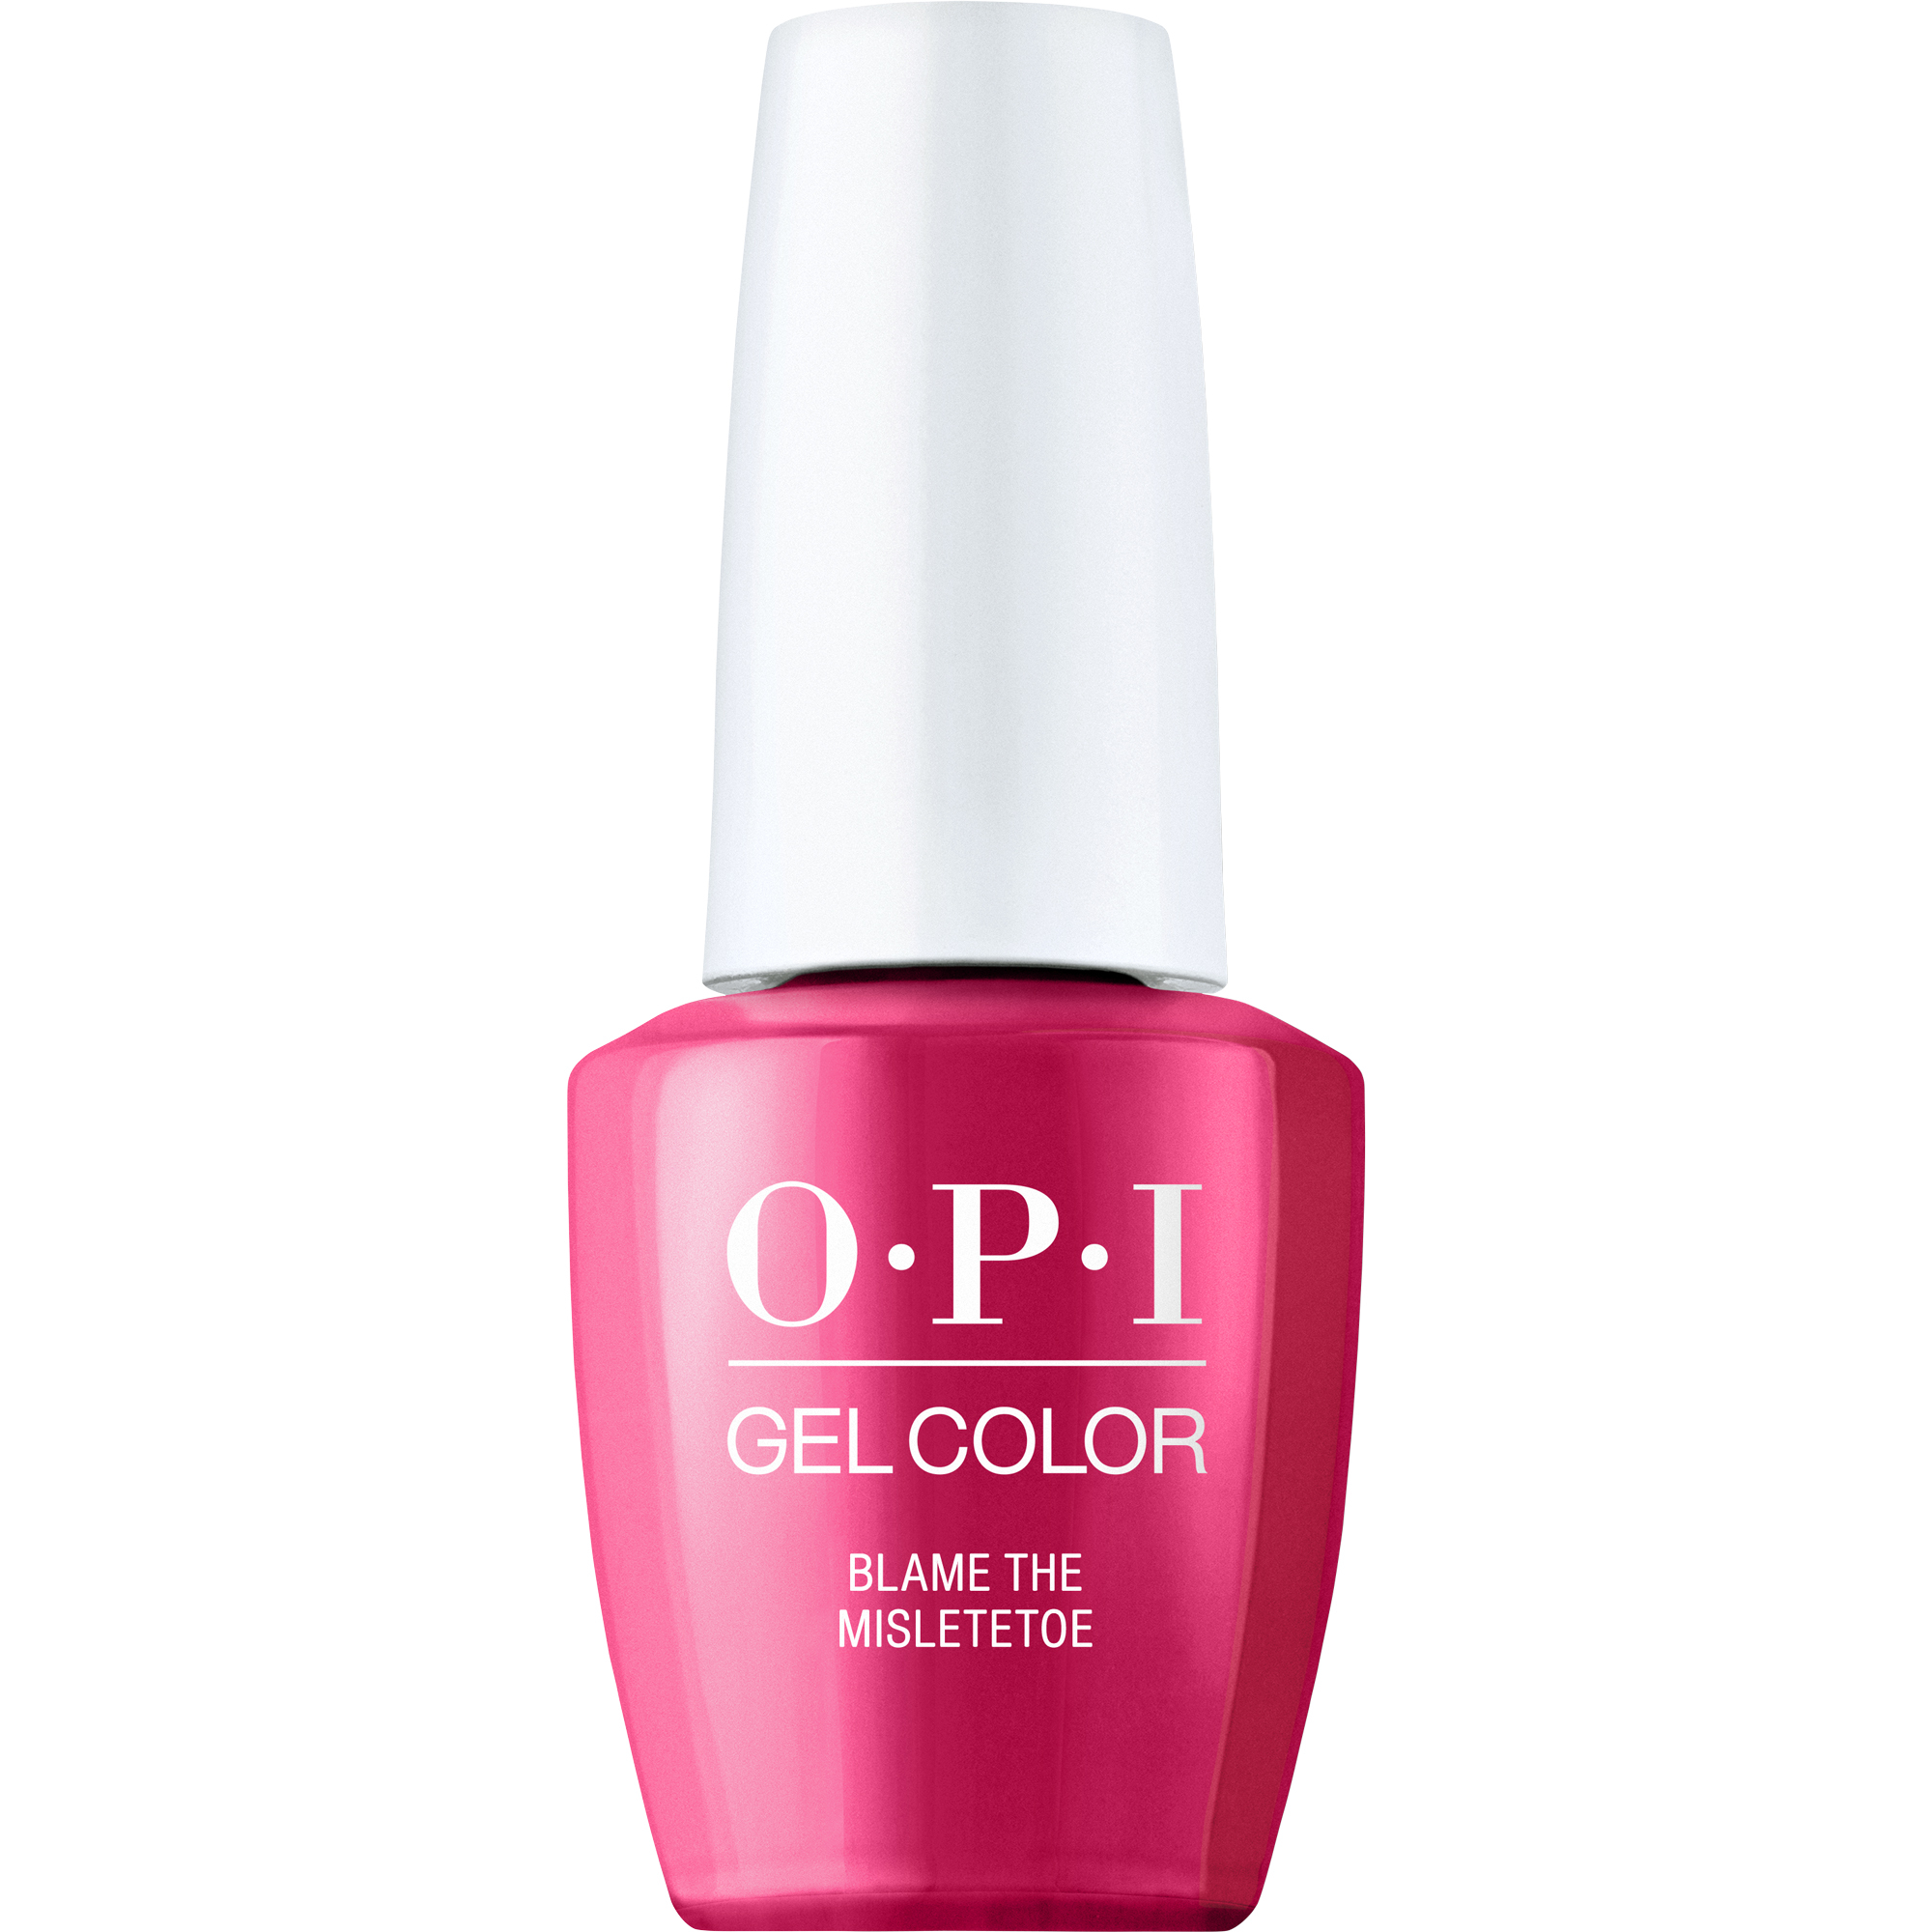 OPI Gel Color 360 - Blame the Mistletoe